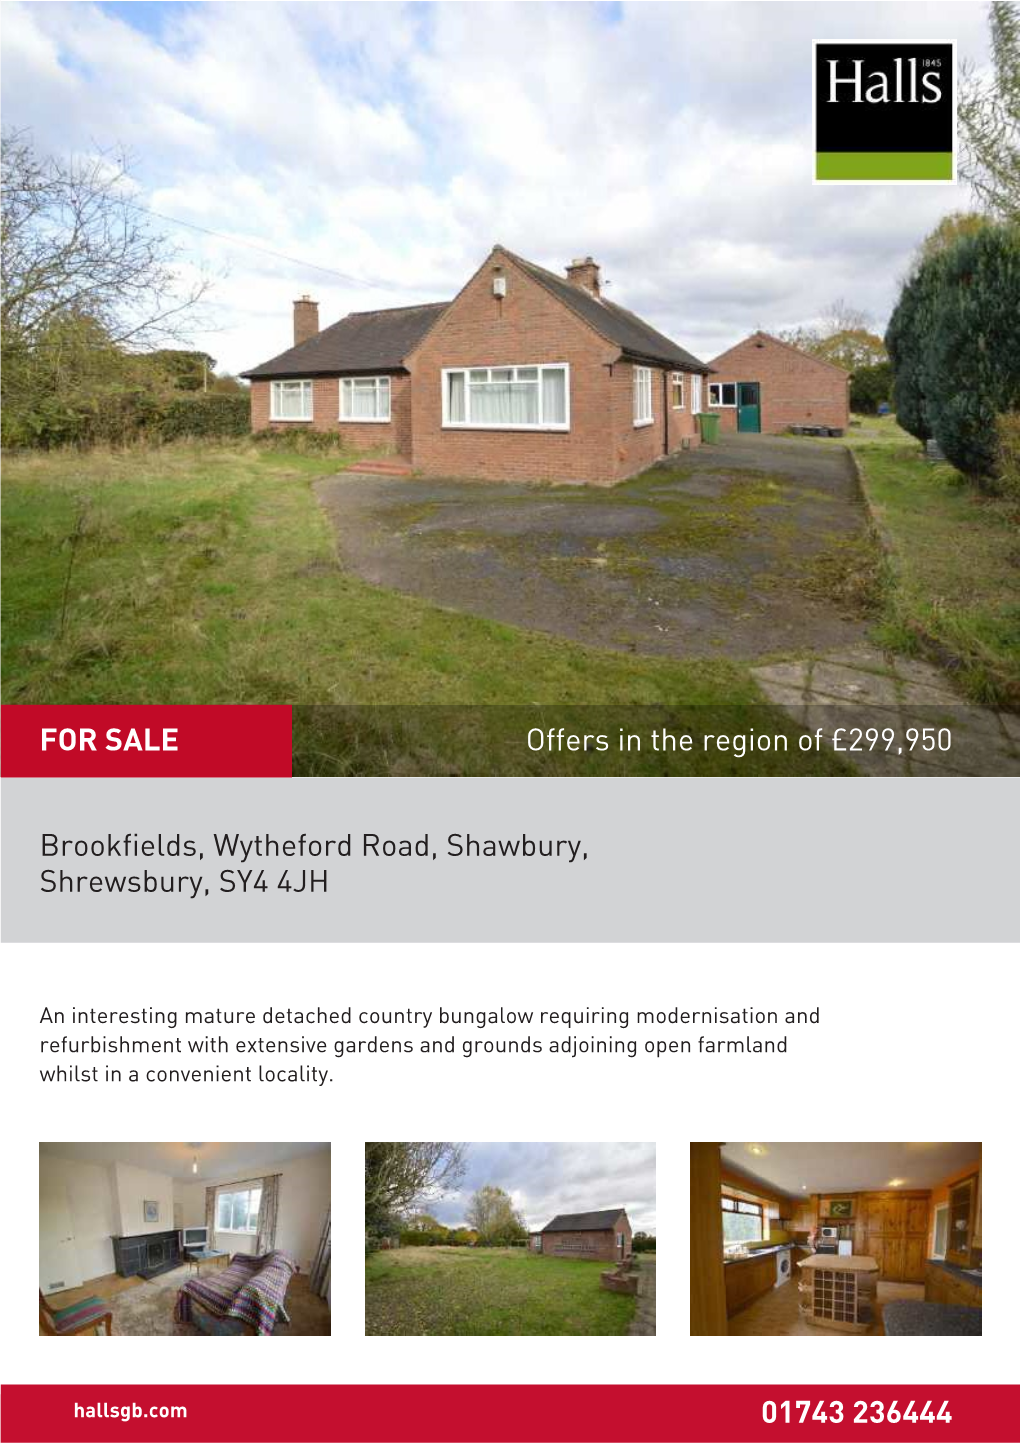 Brookfields, Wytheford Road, Shawbury, Shrewsbury, SY4 4JH 01743 236444 Offers in the Region of £299,950 for SALE